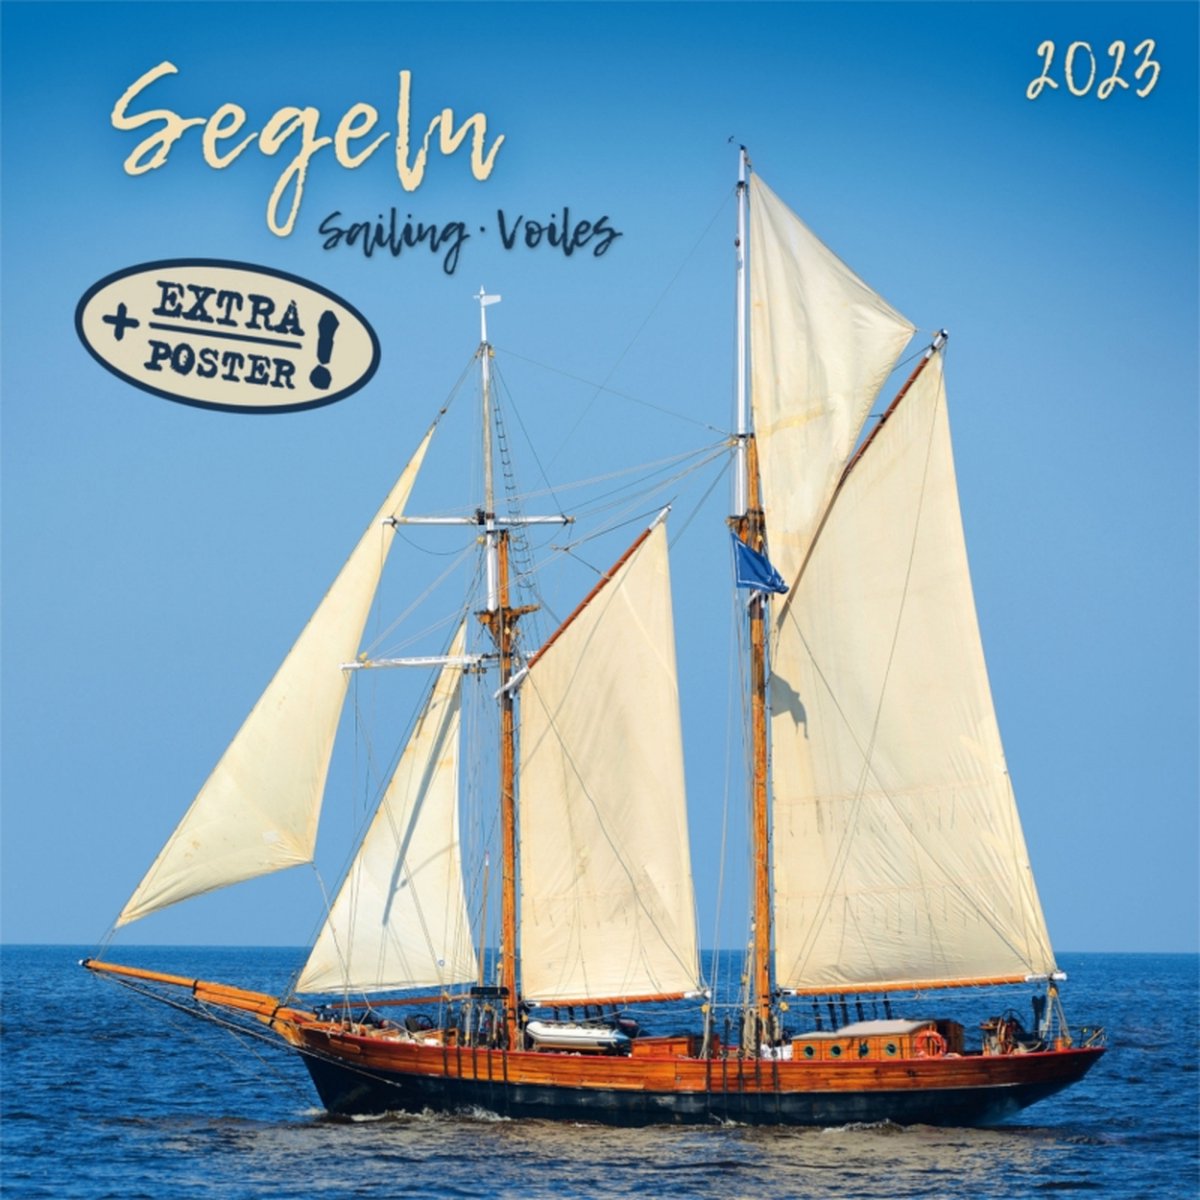 Segeln - Sailing - Voiles 20223Artwork